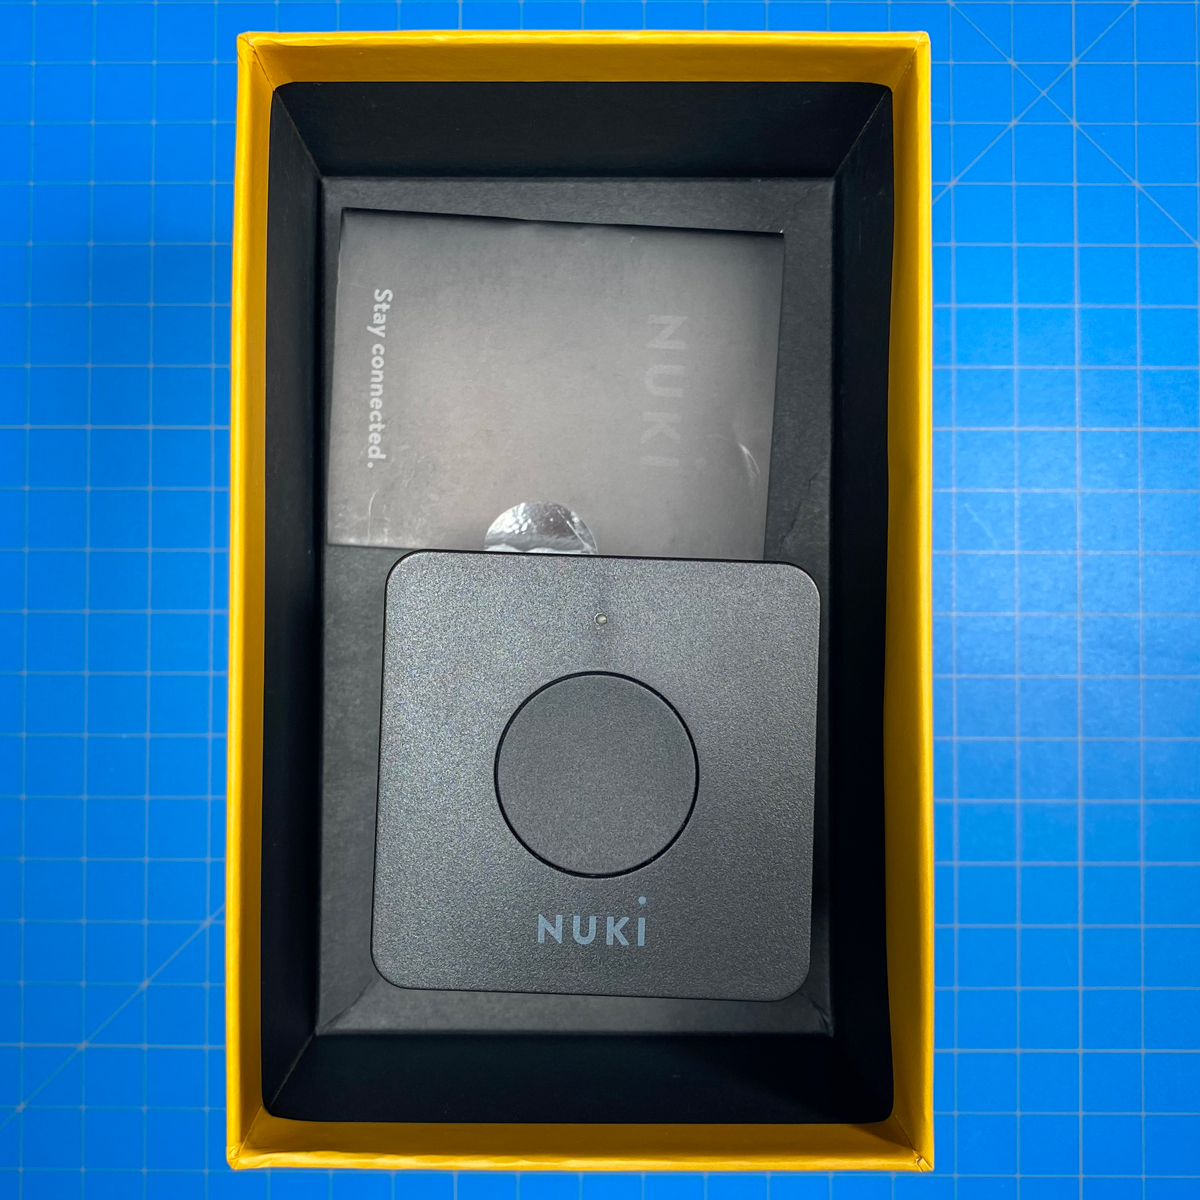 Nuki Lock 2.0plus (review) - Homekit News and Reviews